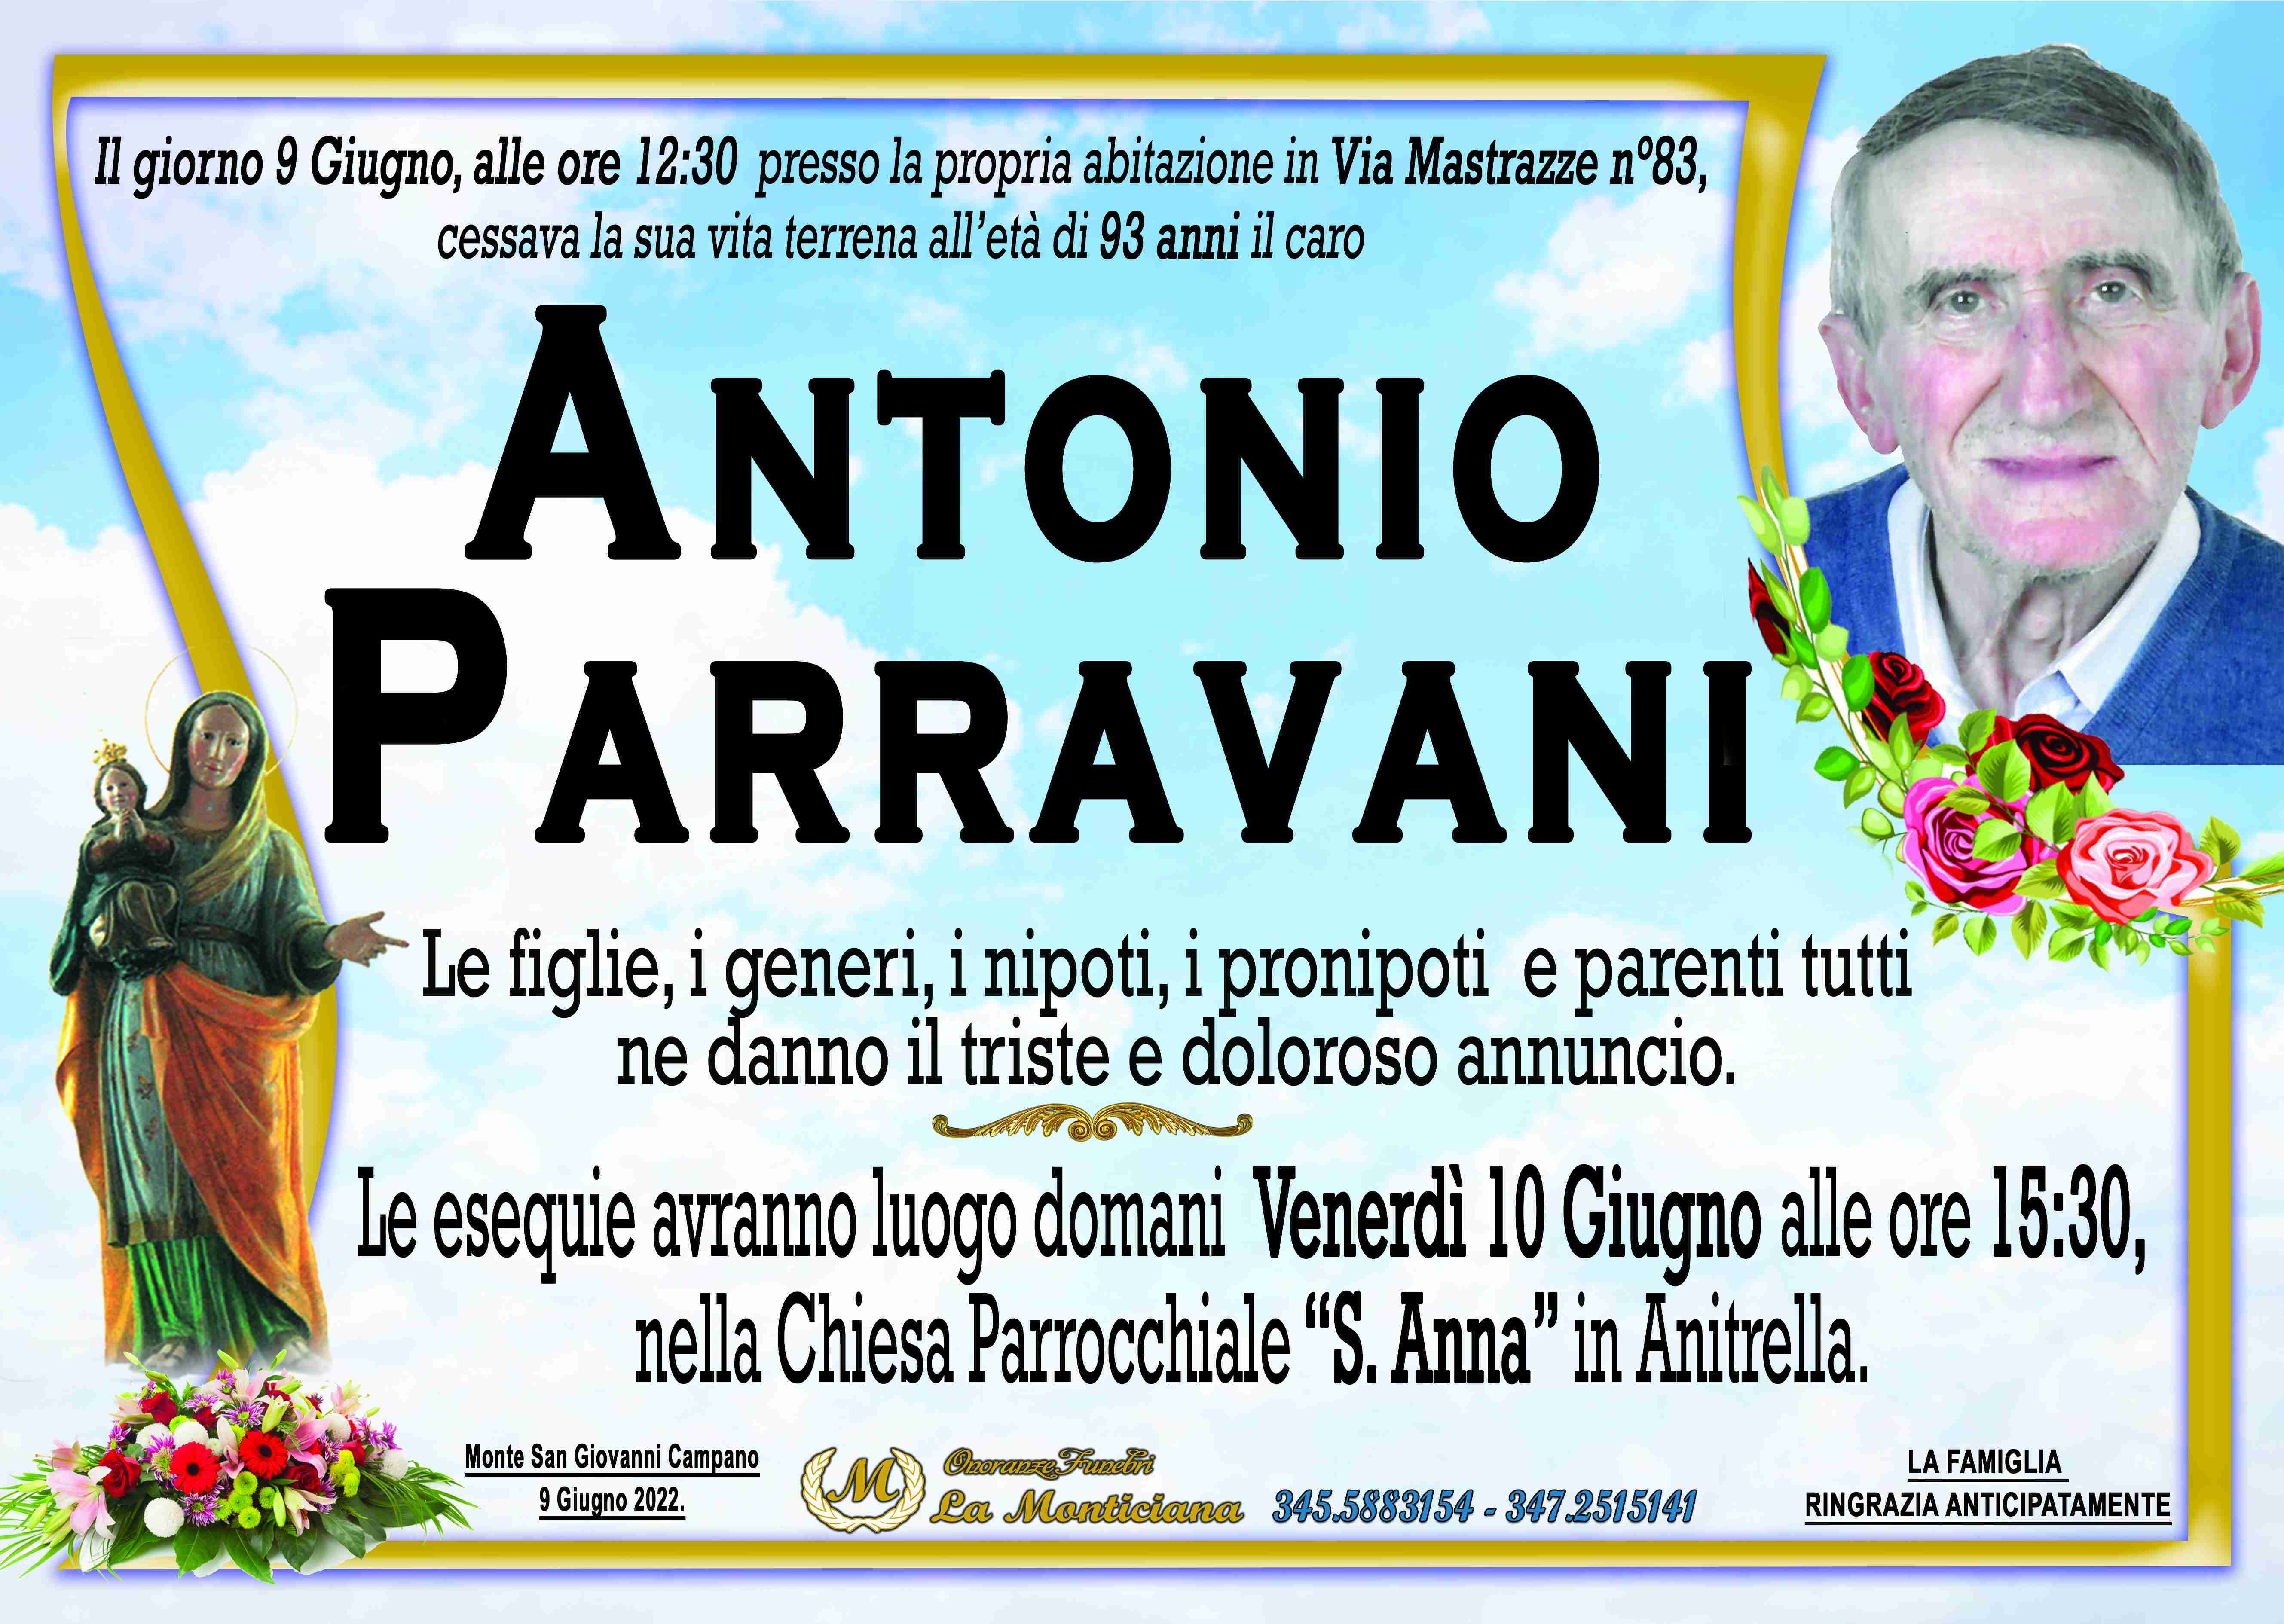 Antonio Parravani